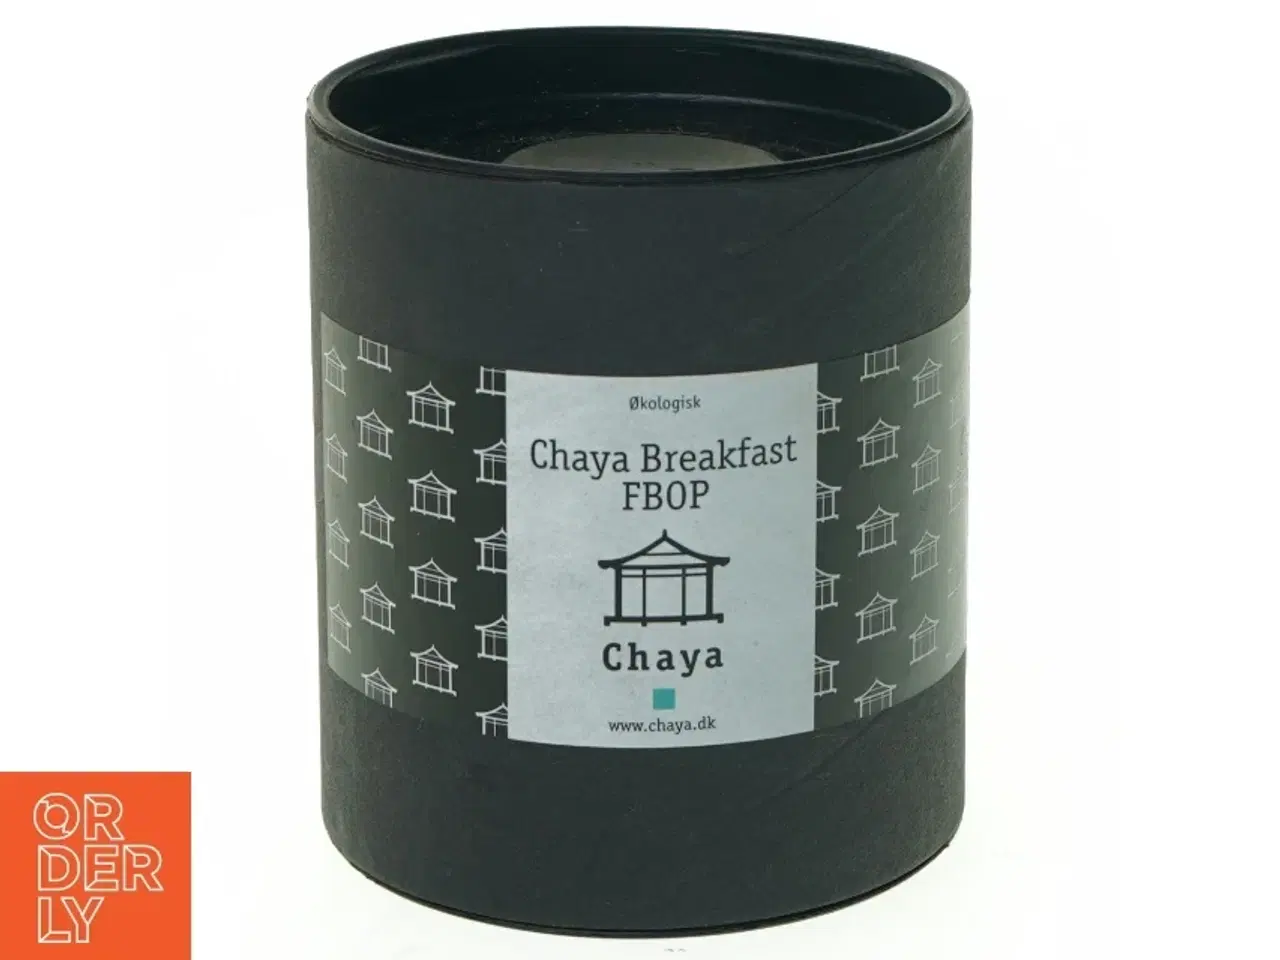 Billede 1 - Chaya breakfast FBOP te fra Chaya (str. 9 x 11 cm)